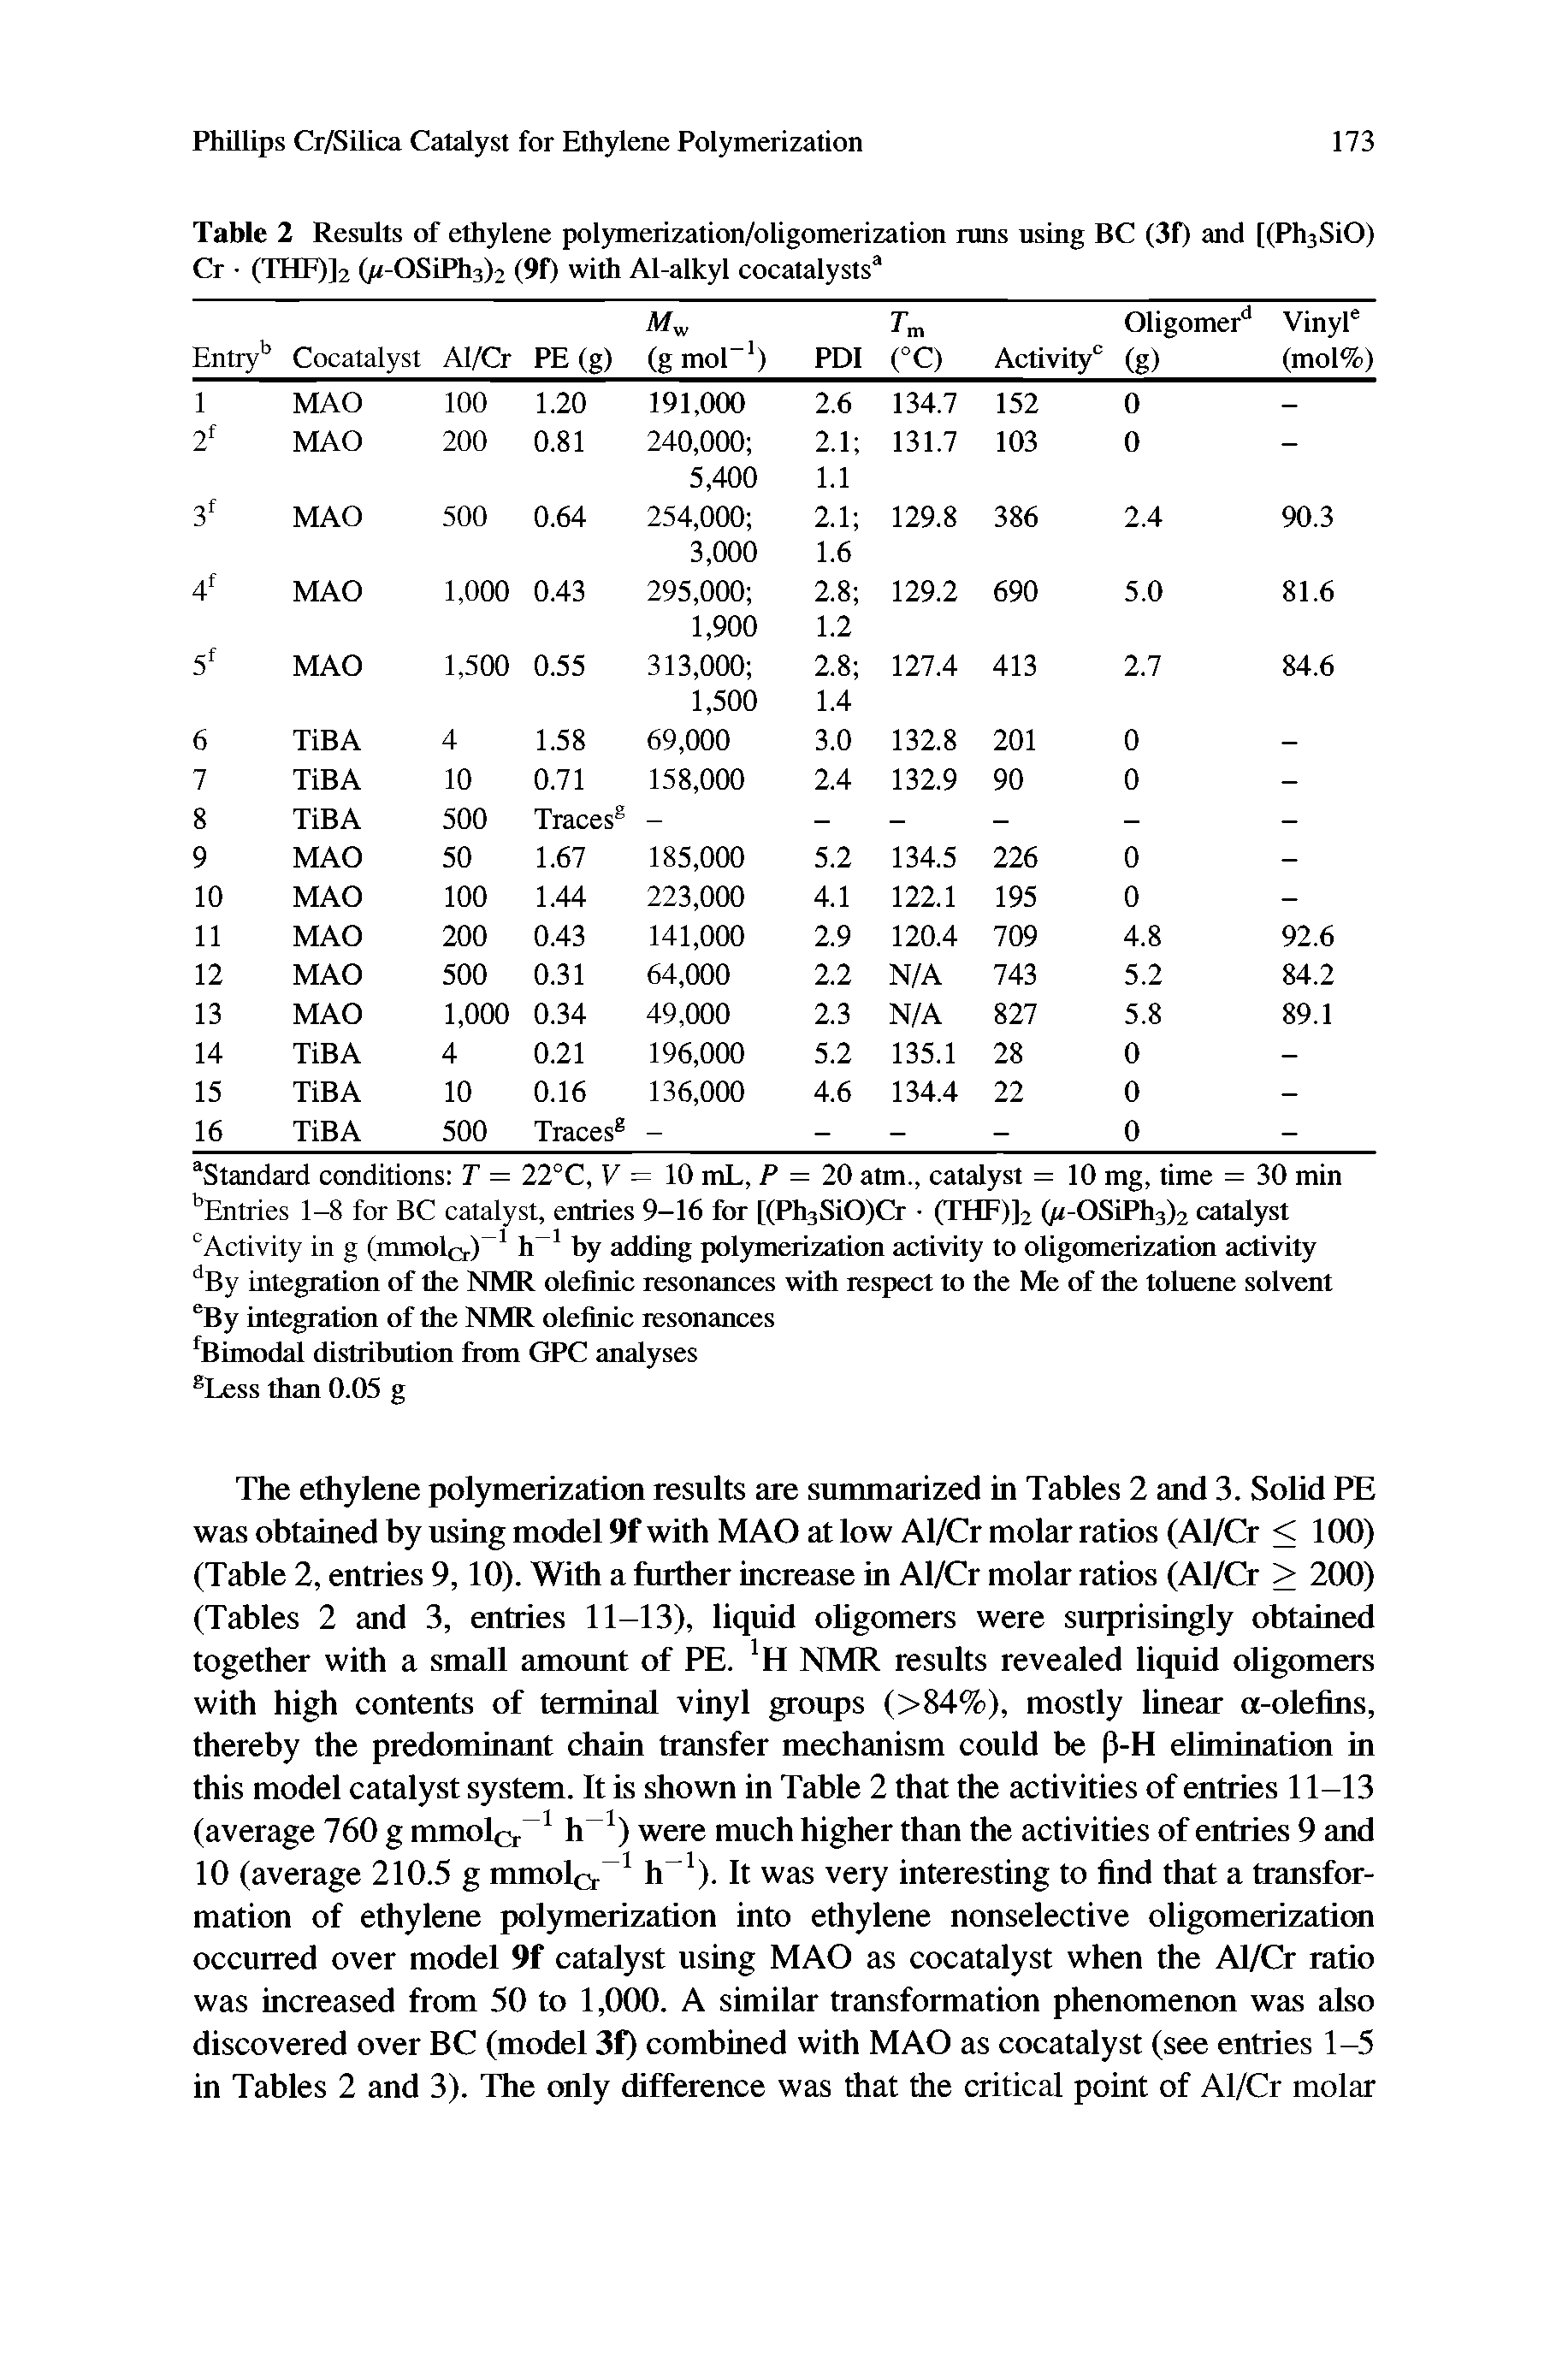 Table 2 Results of ethylene polymerization/oligomerization runs using BC (3f) and [(PhaSiO) Cr (THF)]2 0/-OSiFTi3)2 (9f) with Al-alkyl cocatalysts ...